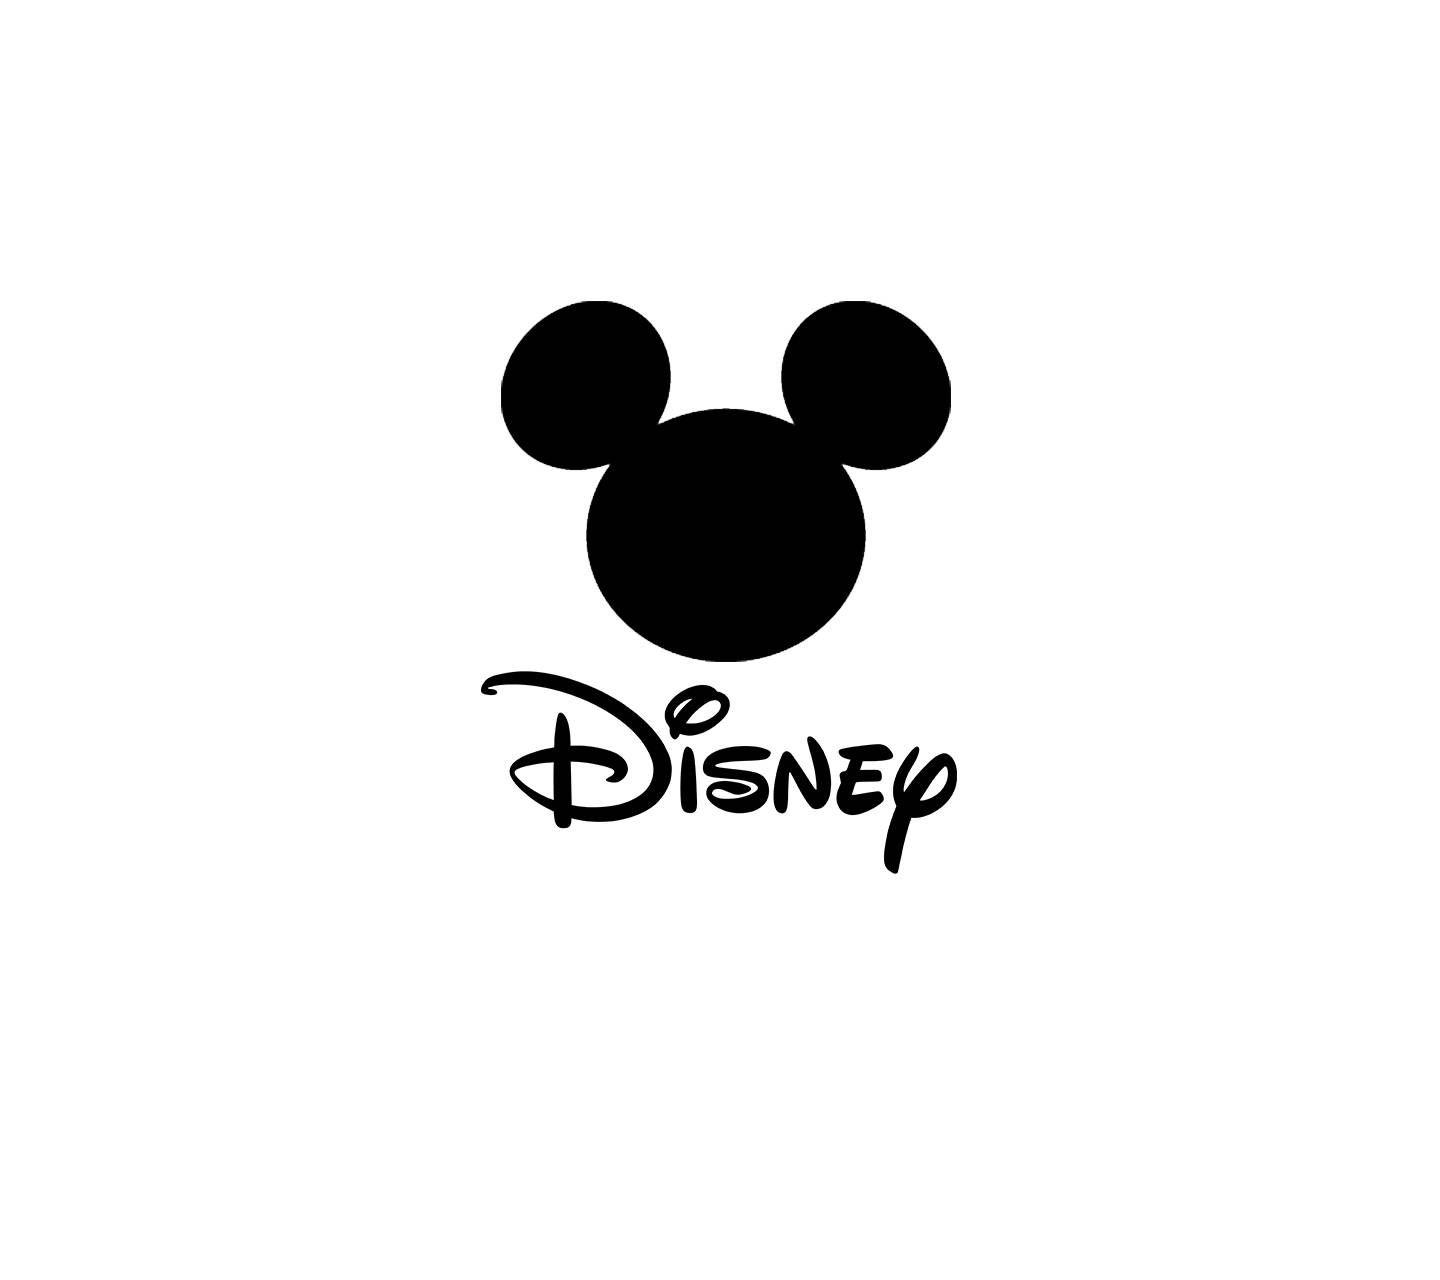 Disnney Logo - Disney Logo White Wallpaper by NeoMystic - 17 - Free on ZEDGE™